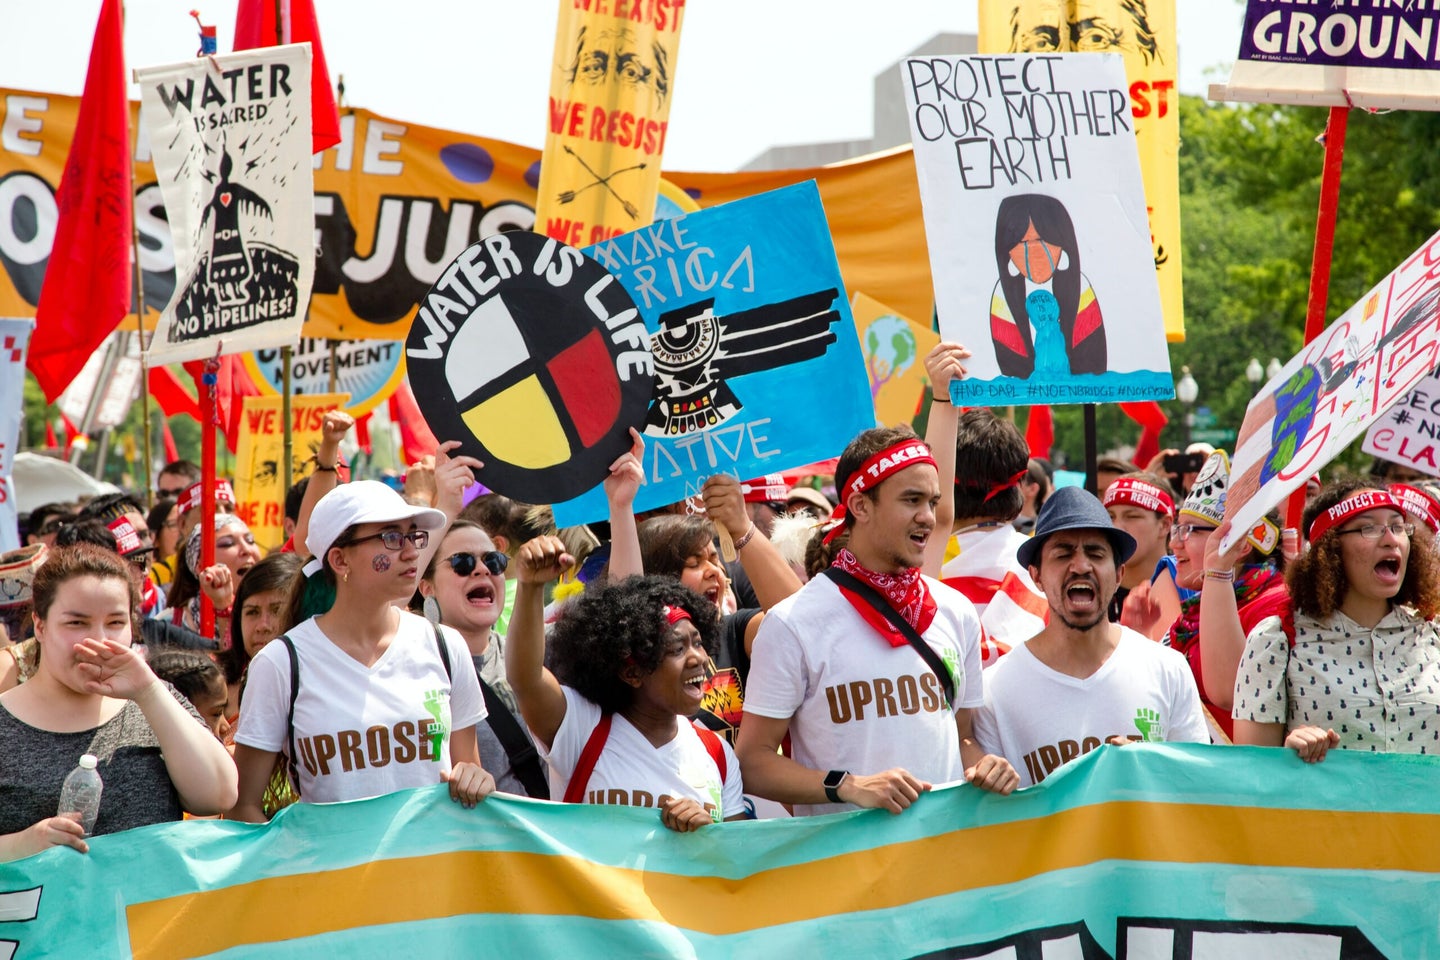 protestors of pipelines